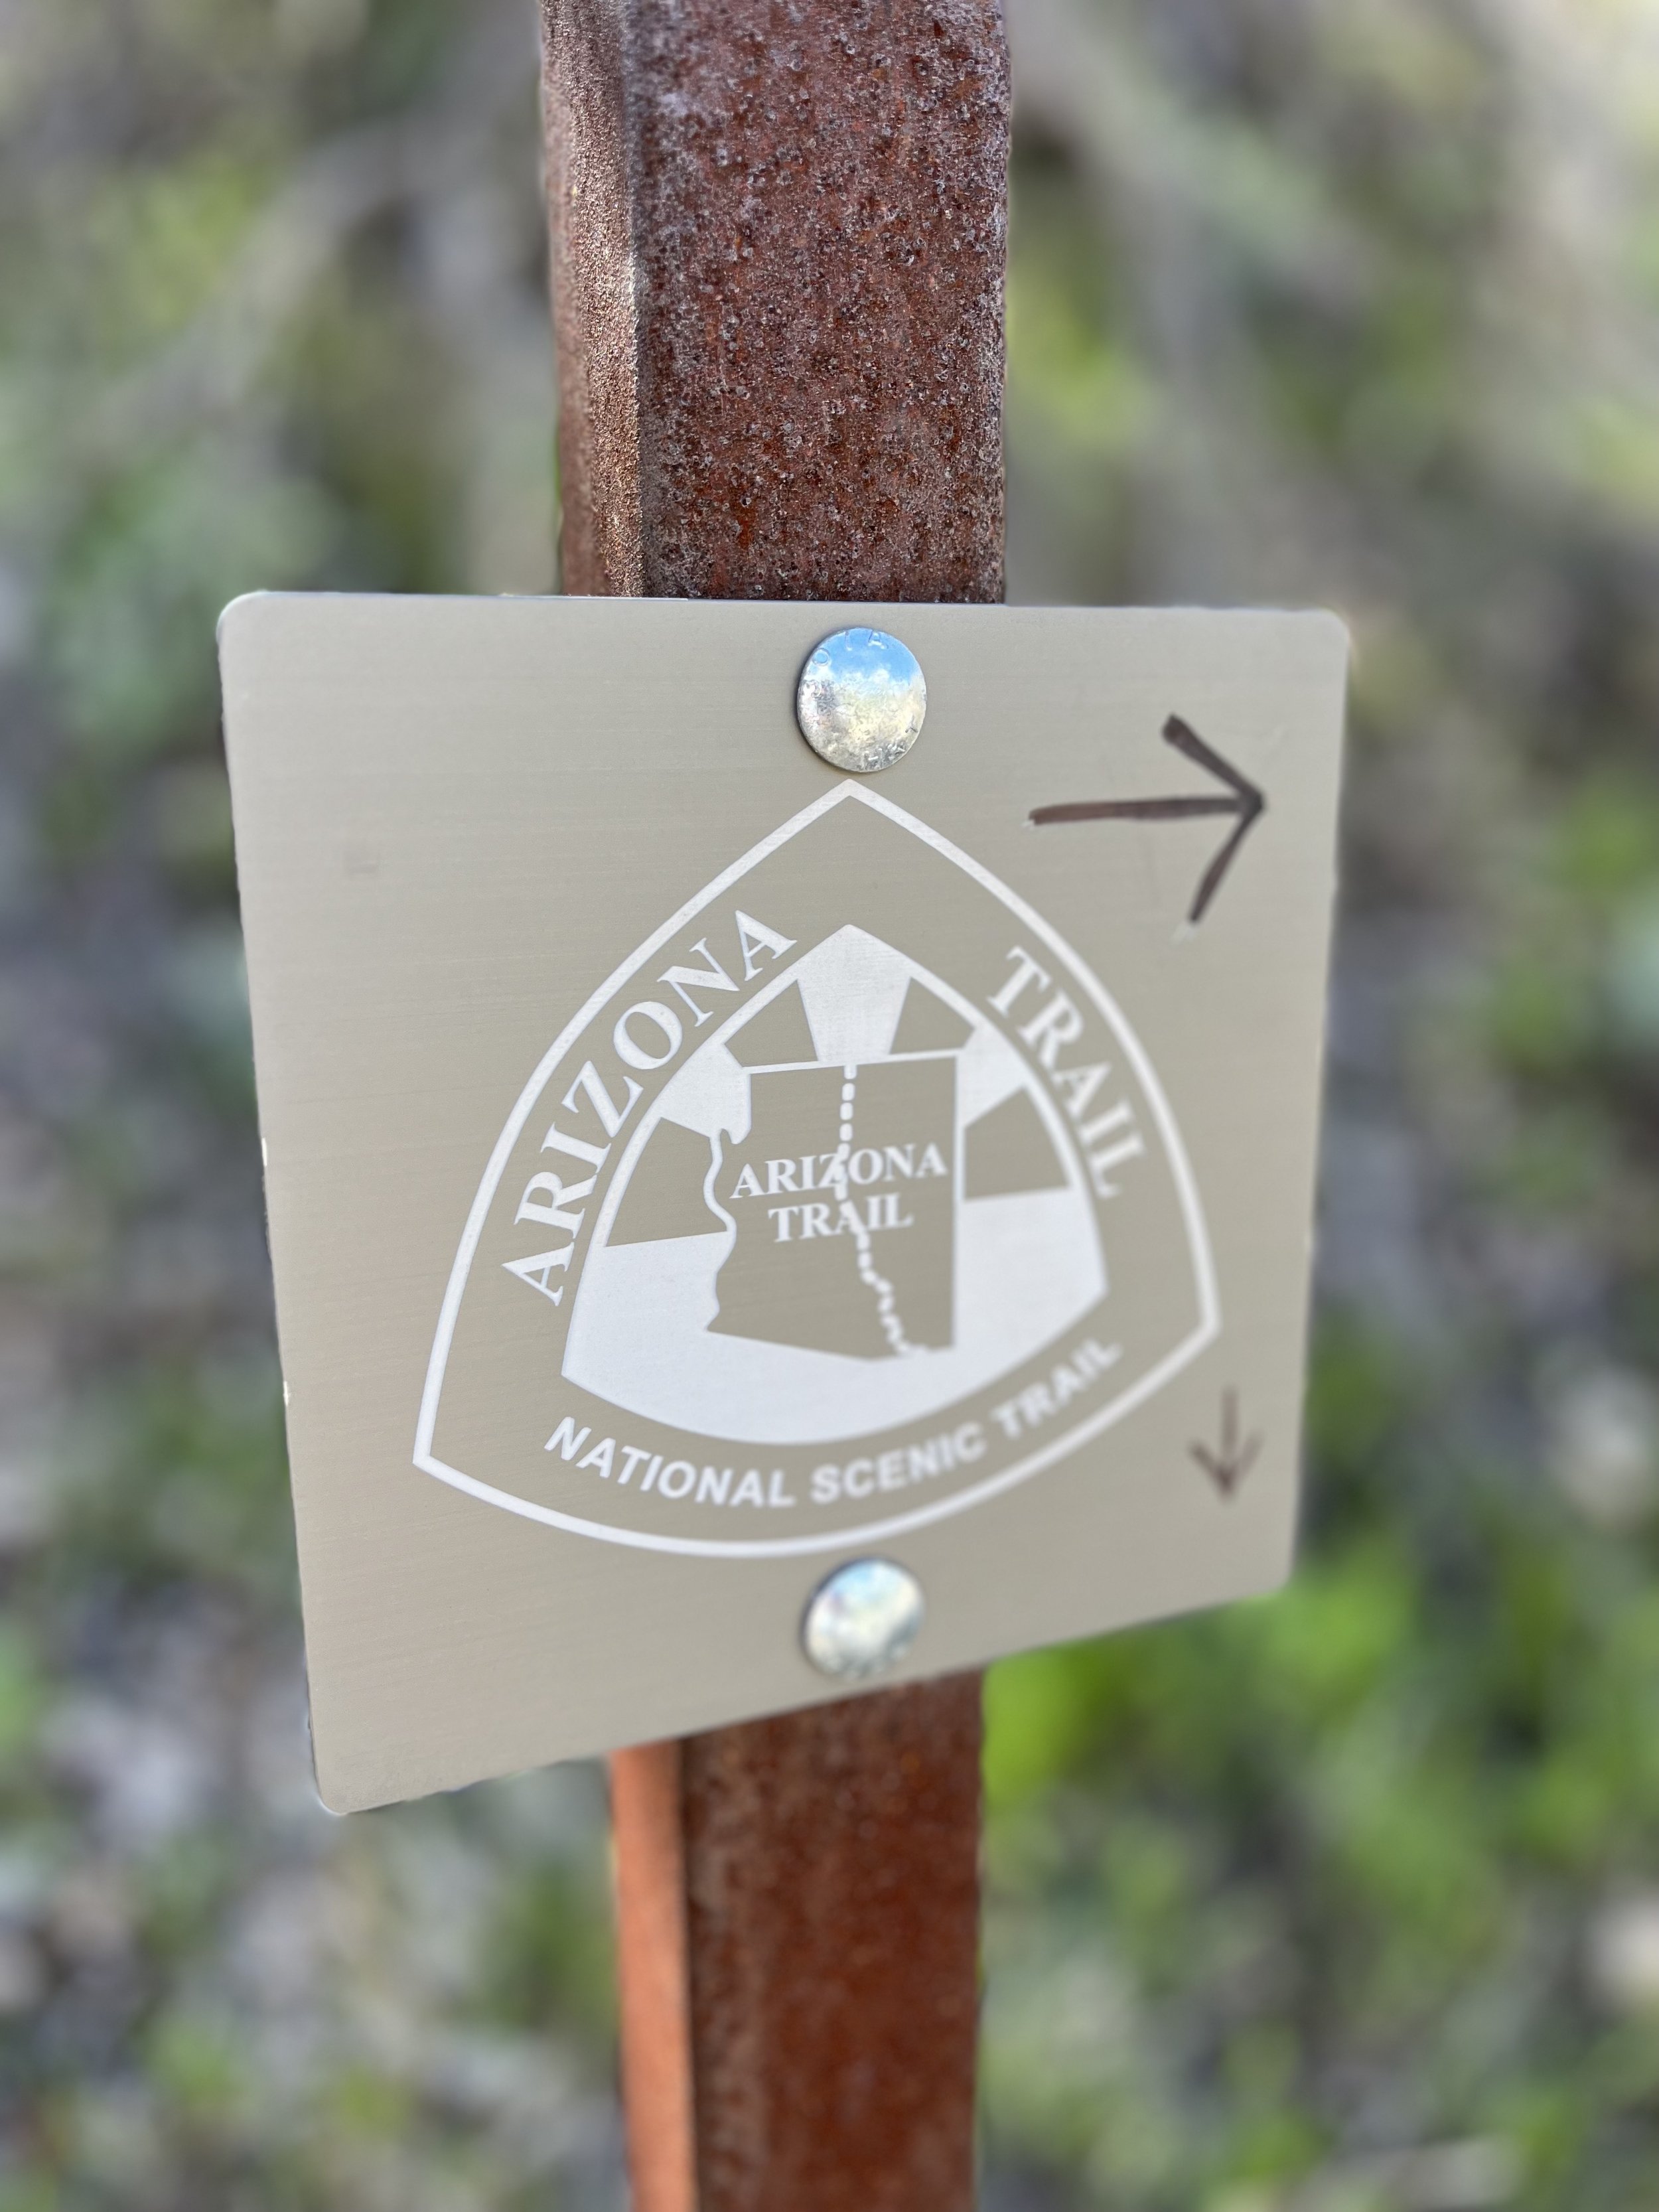 Arizona Trail Section Hike Arrows.jpg